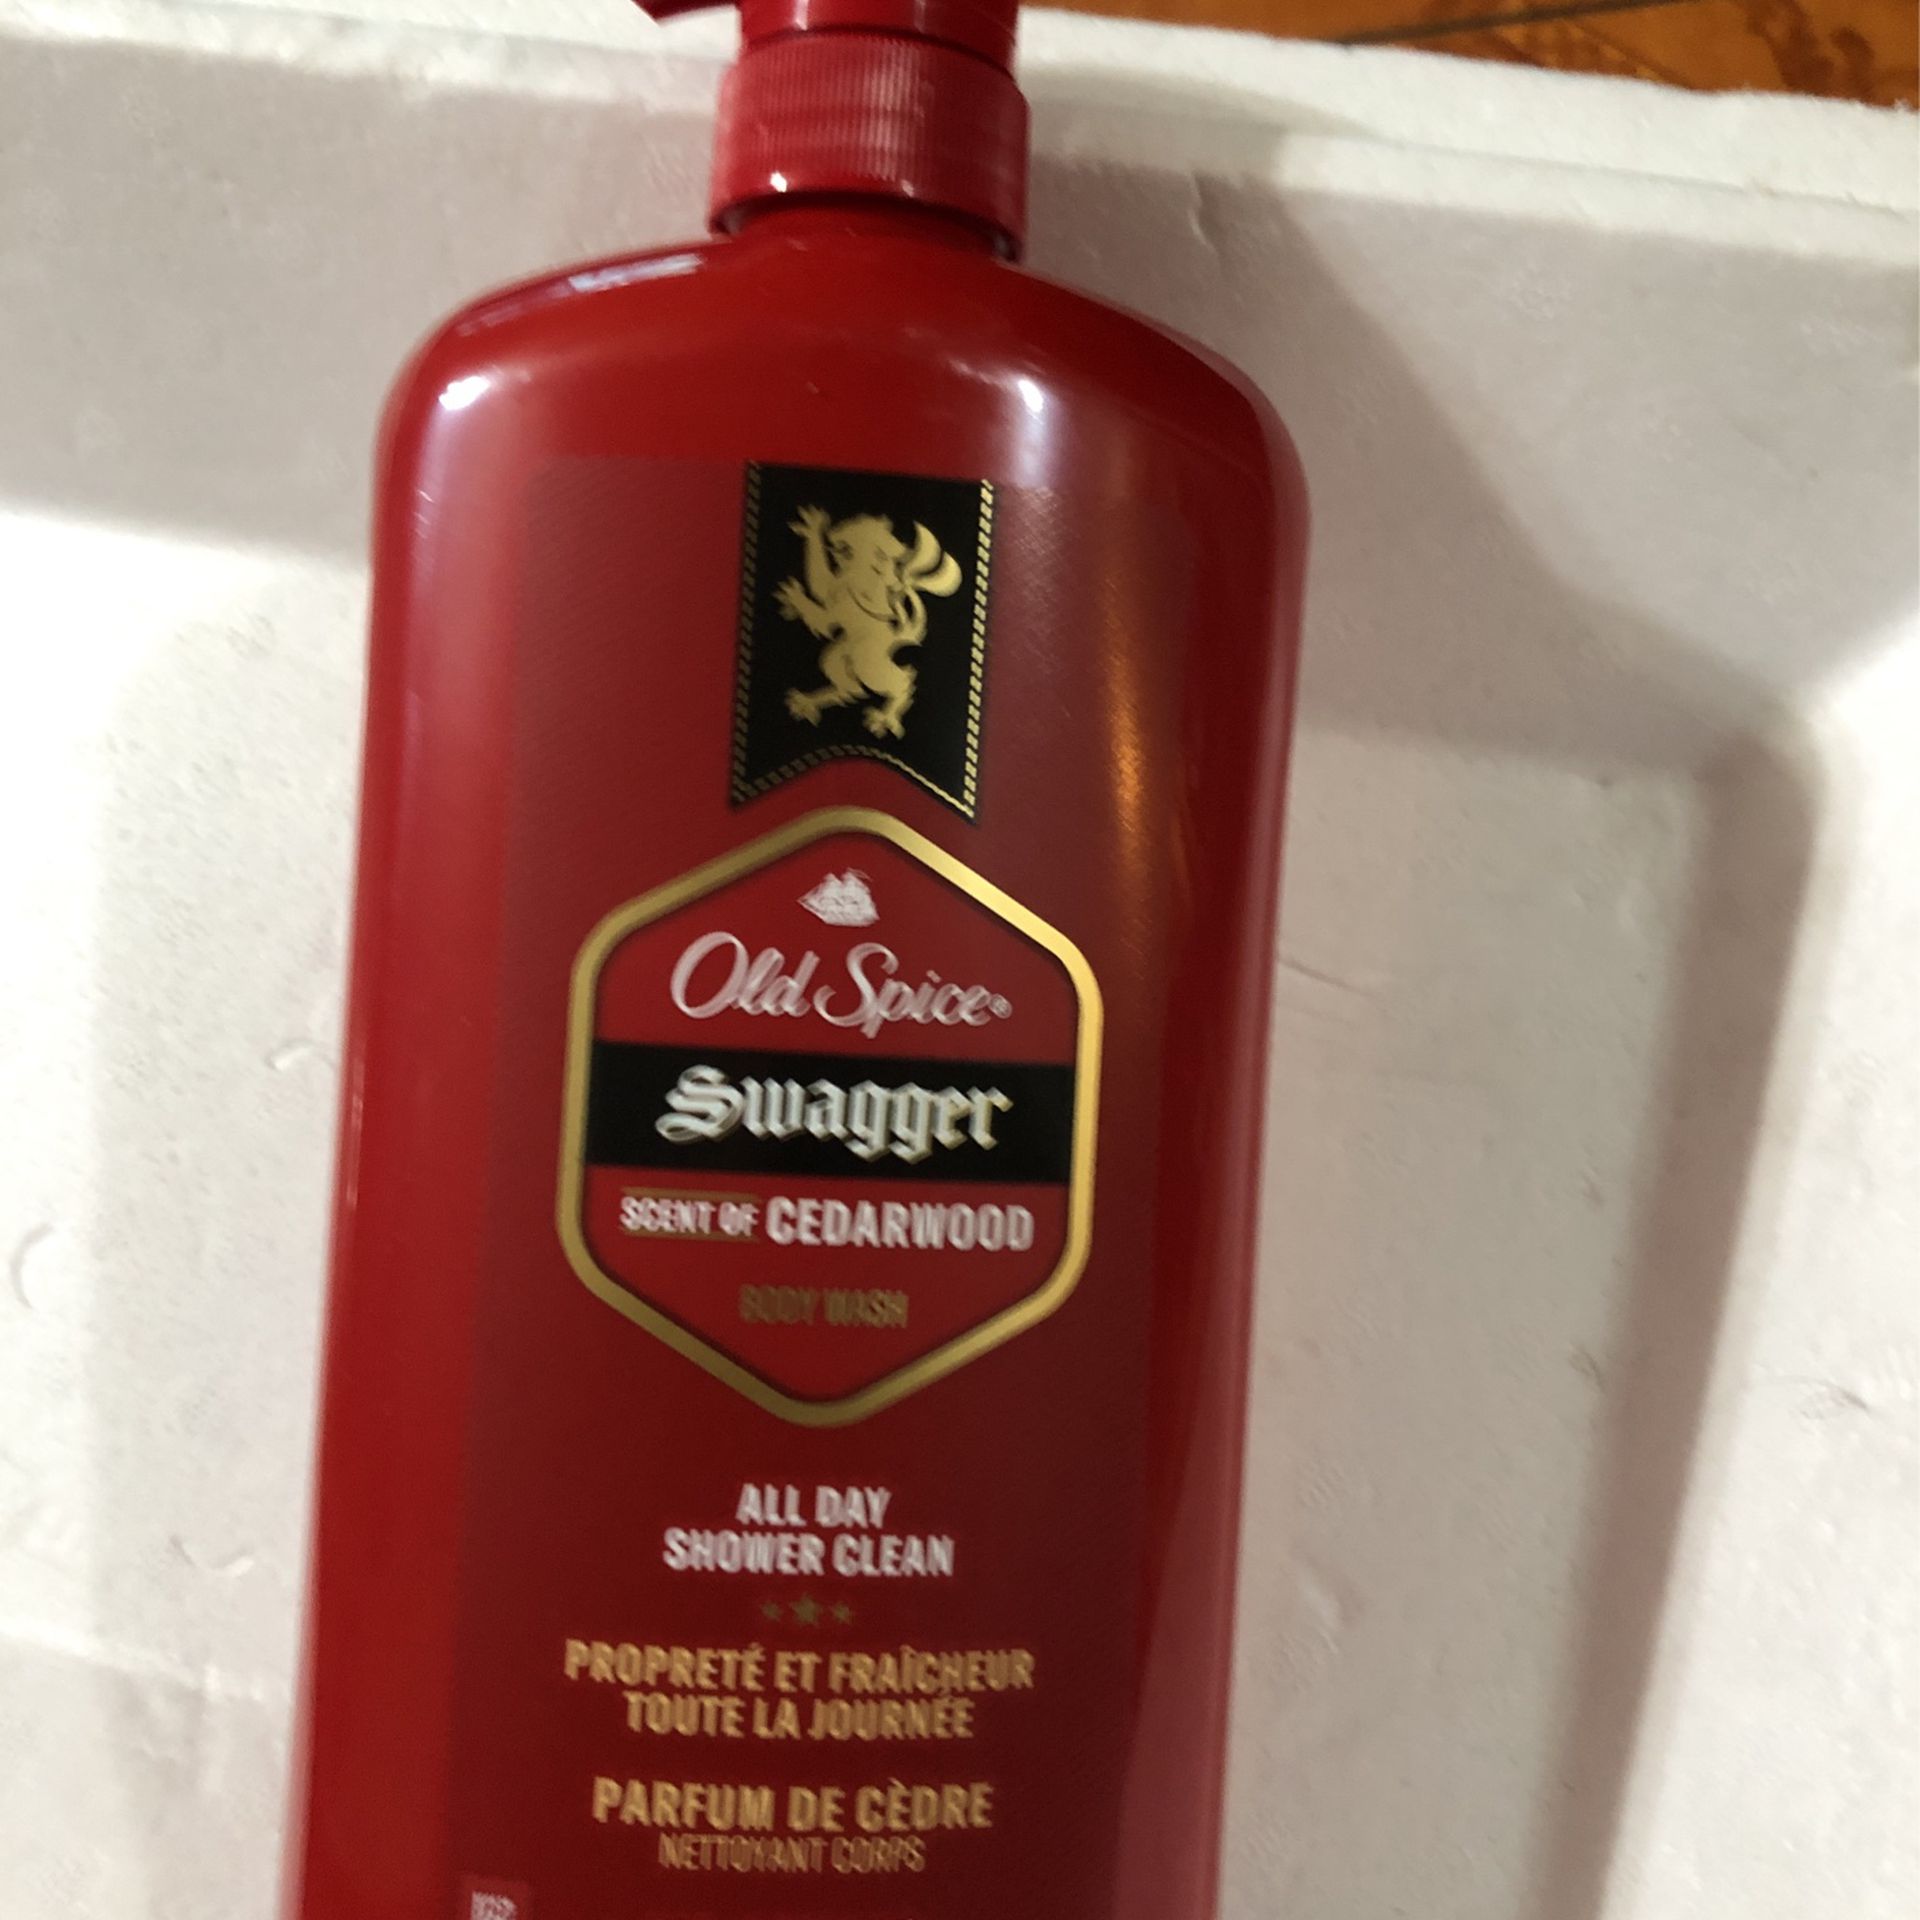 Shower. Old Spice Botella Grande 887mL